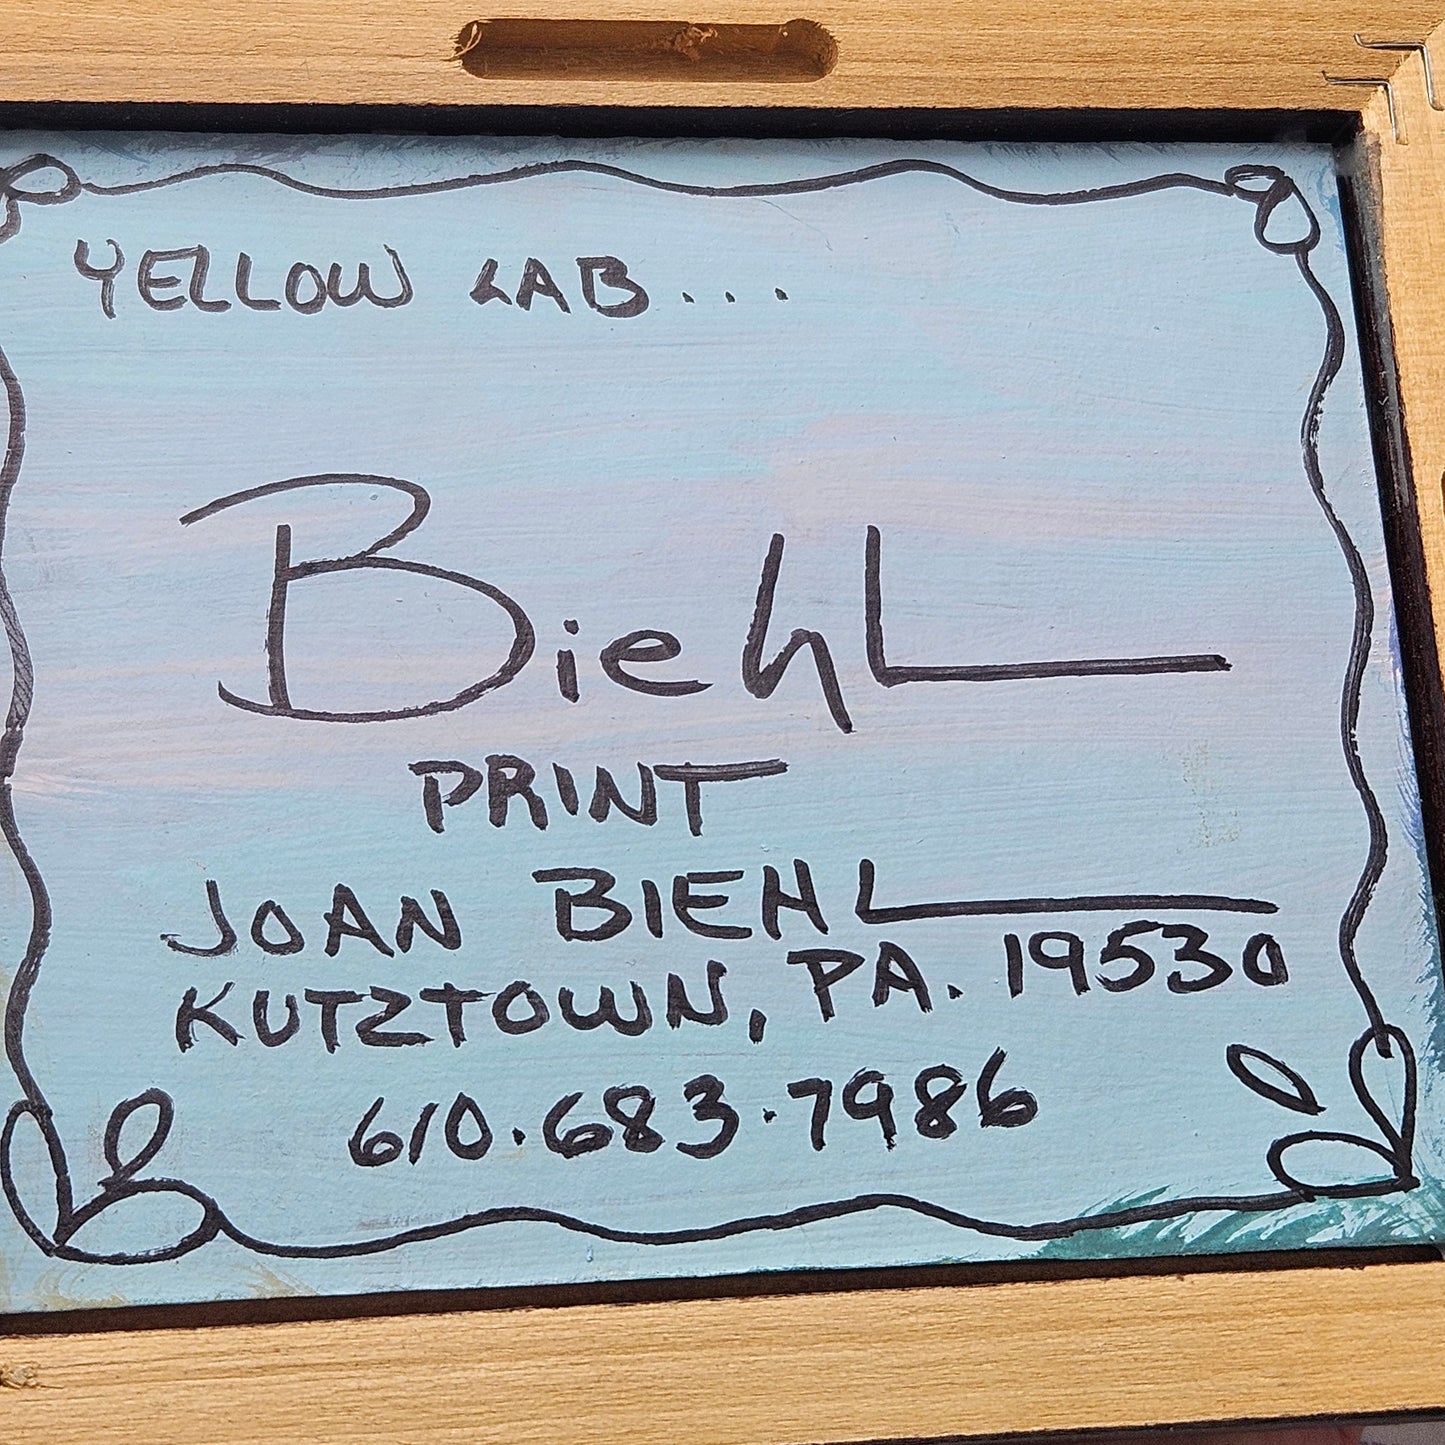 Adorable Yellow Labrador Dog Artwork on Board by Joan Biehl